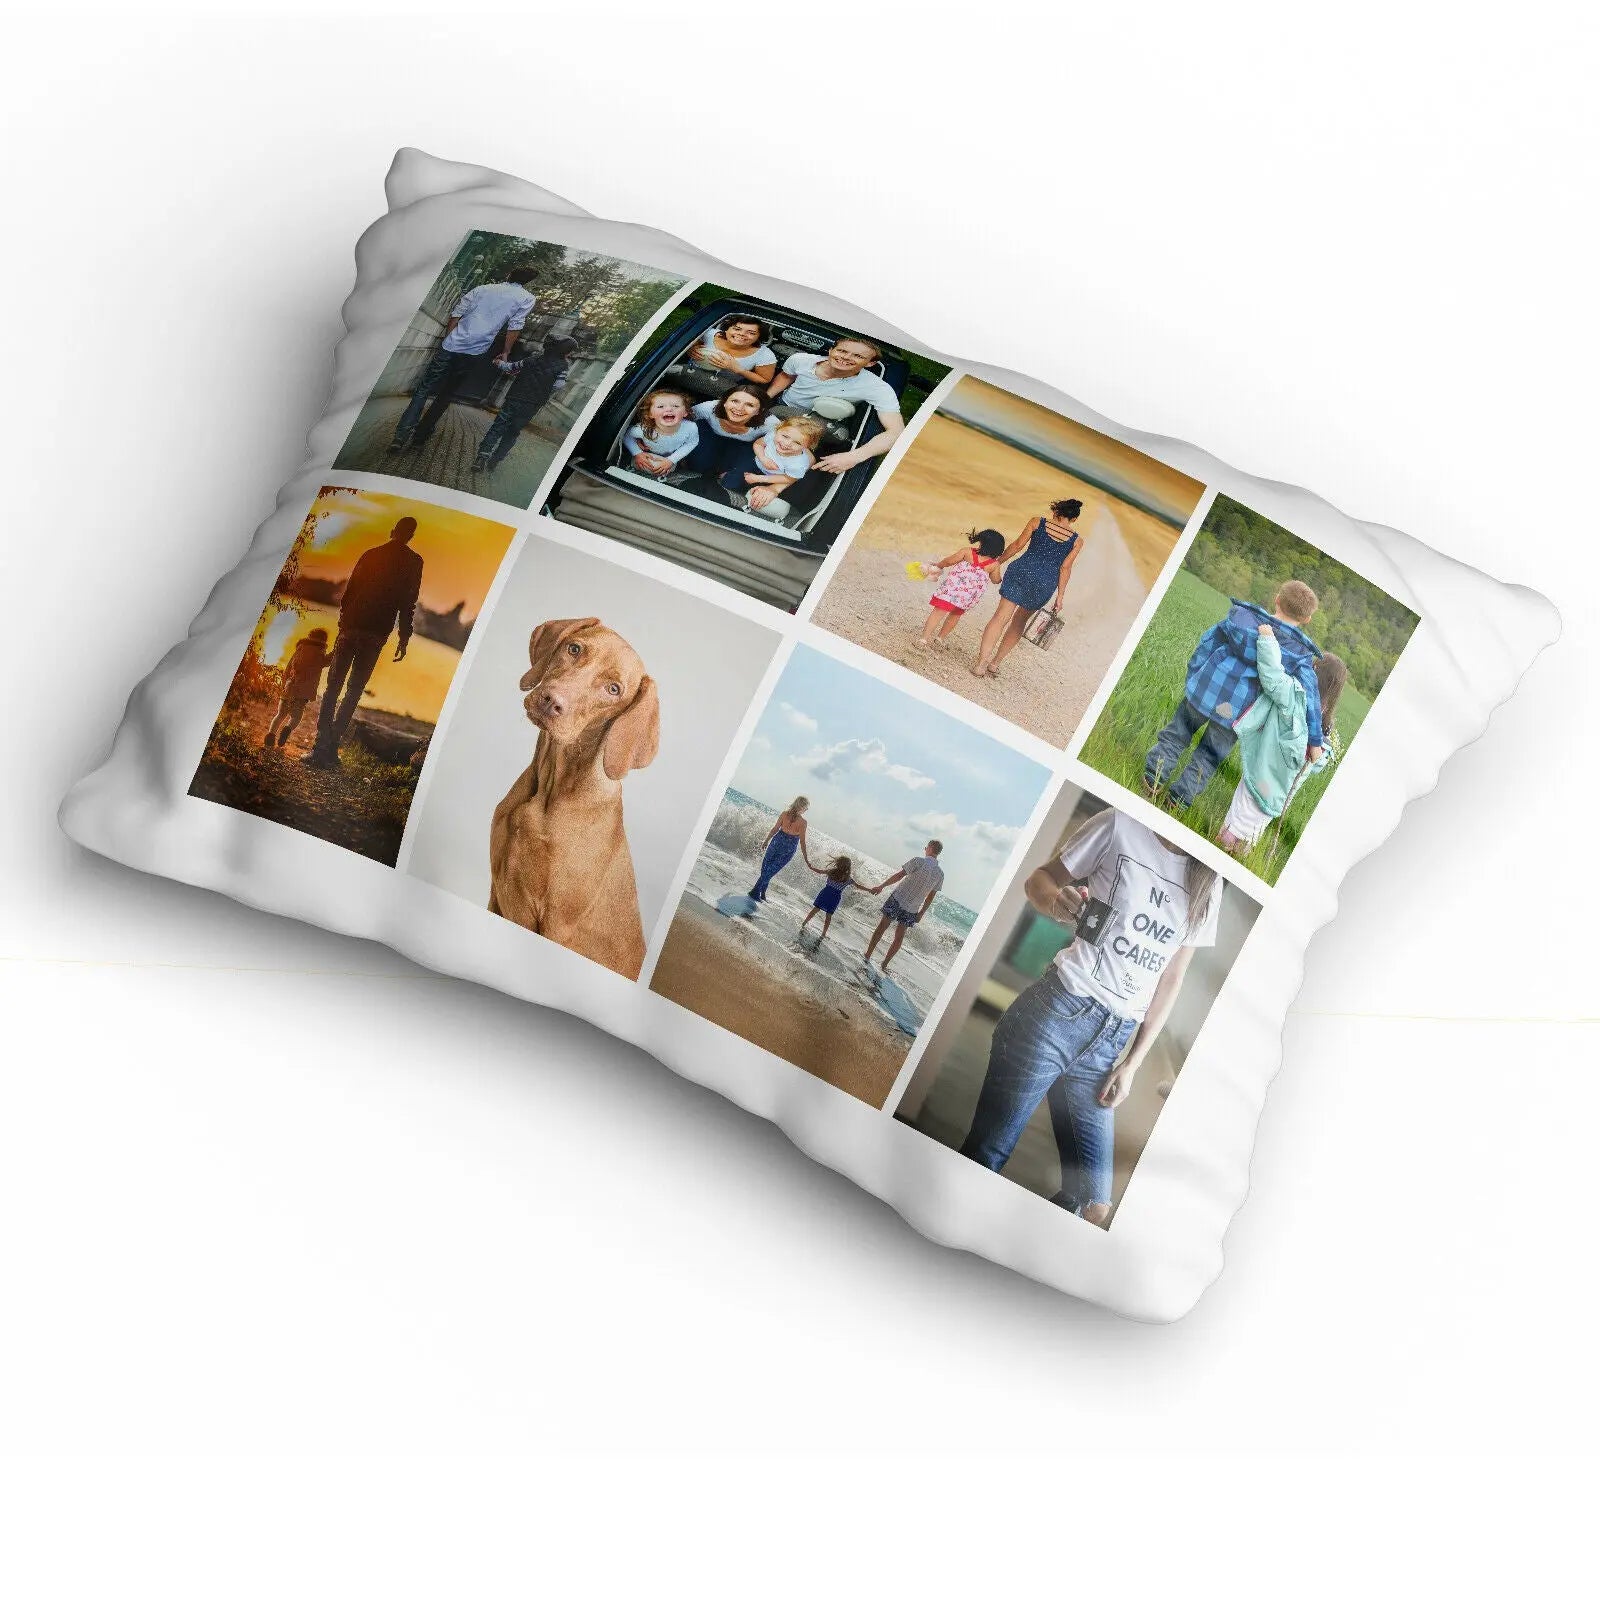 Personalised Photo Pillow case - 8 Images - Fully Customisable - CushionPop